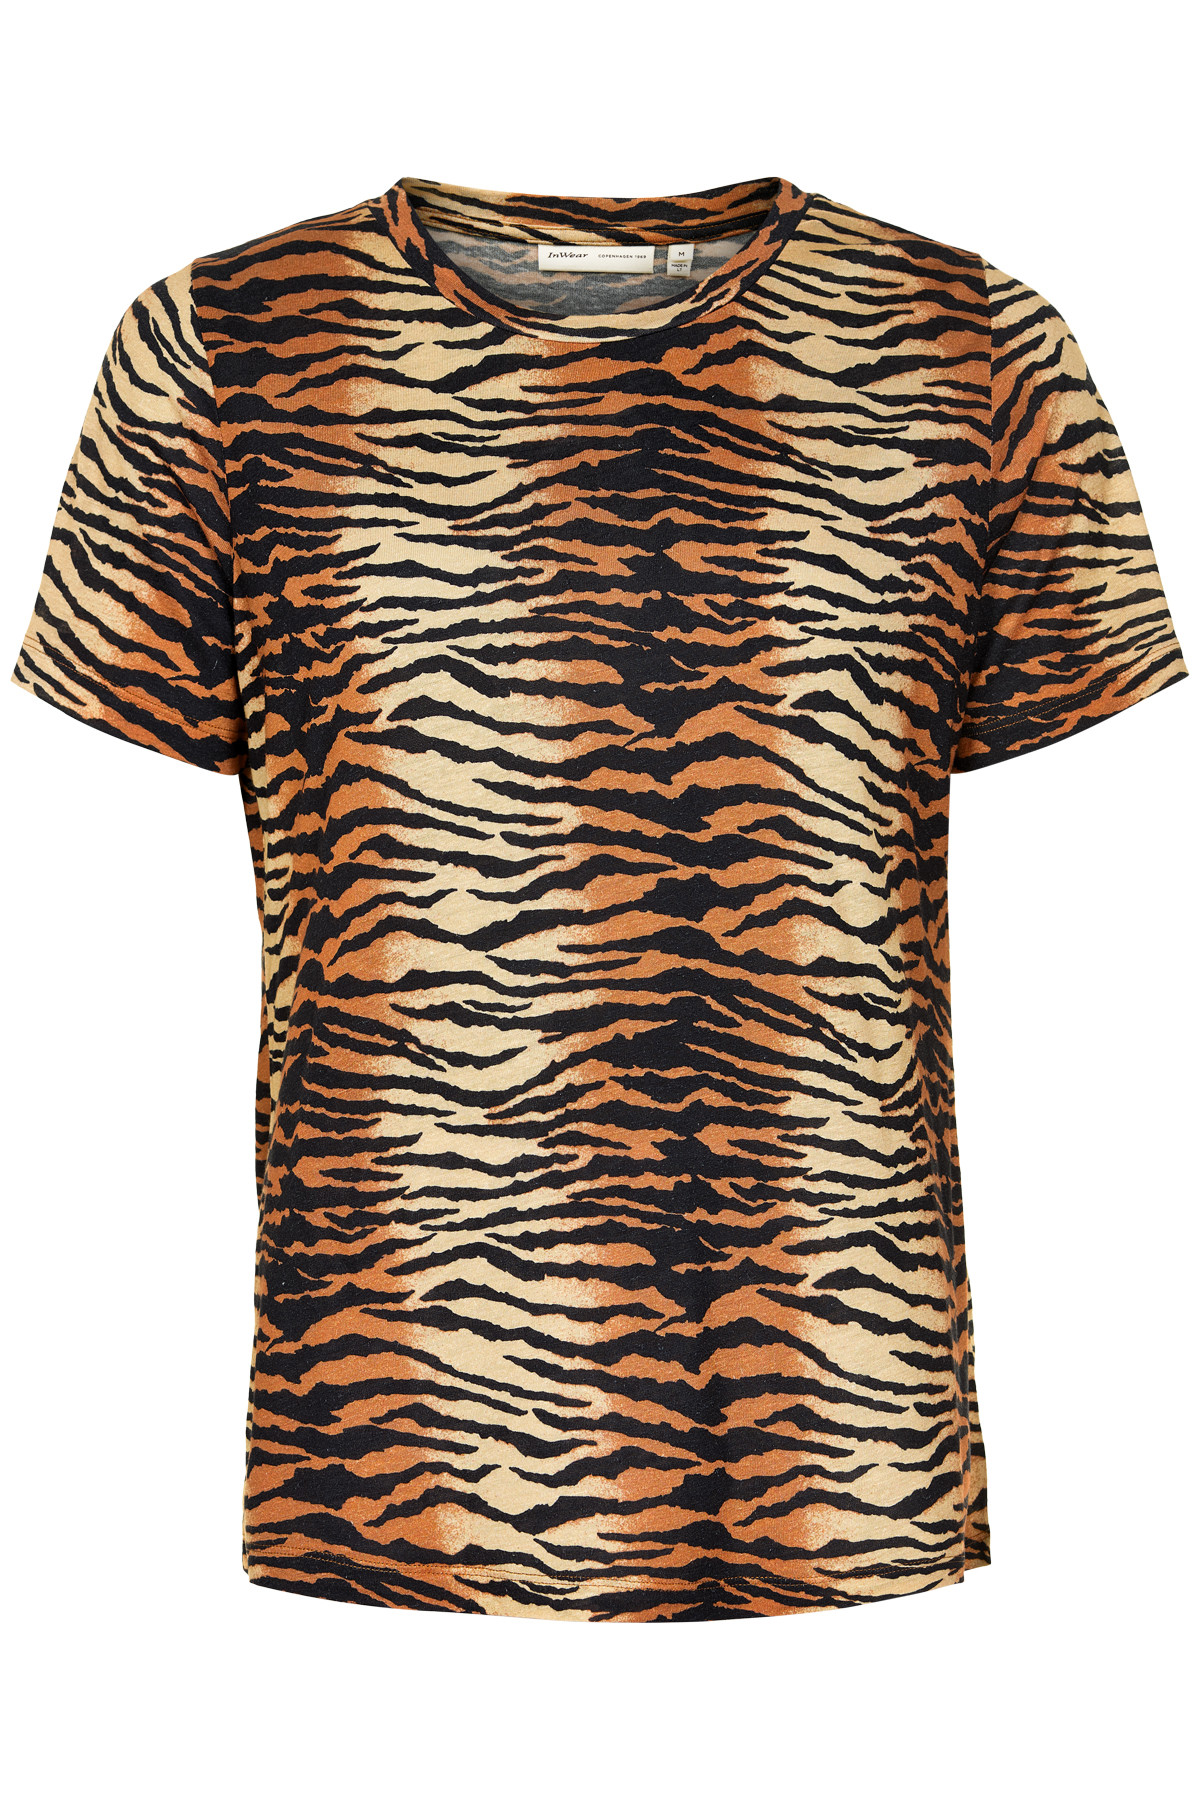 Inwear Rosita T-shirt B, Farve: Brun Tiger Stripe, Størrelse: S, Dame